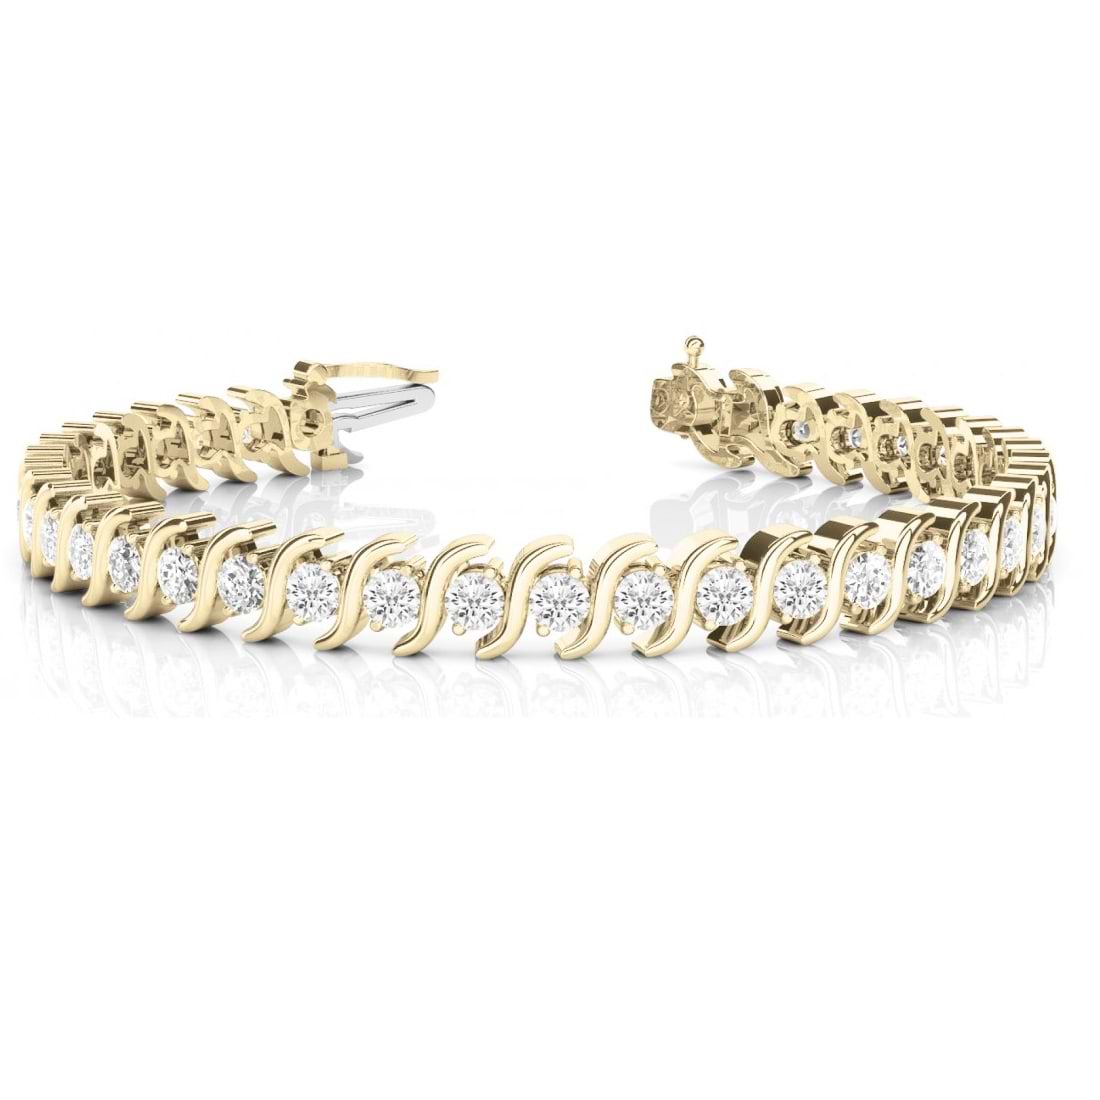 Diamond Tennis S Link Bracelet 18k Yellow Gold (5.00ct)